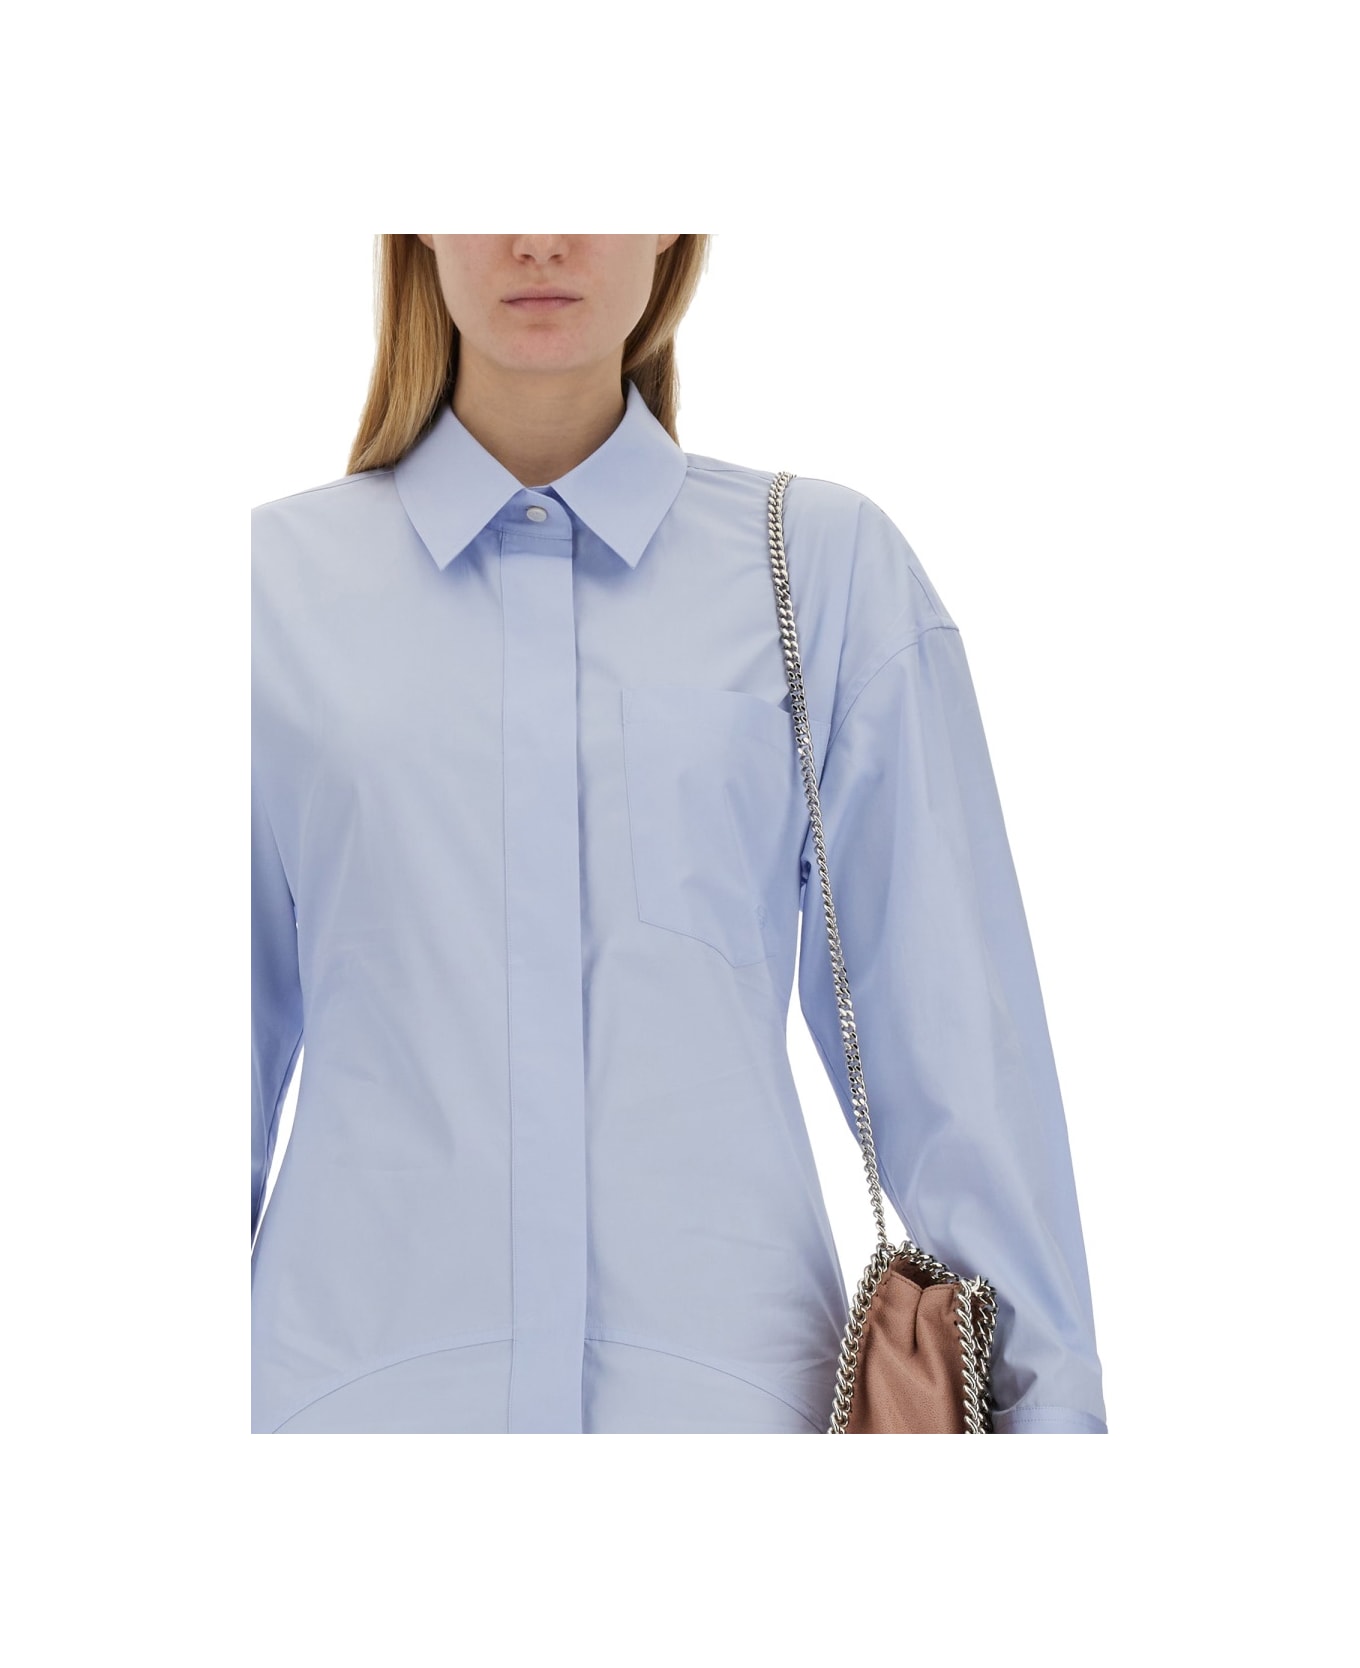 Stella McCartney Shirt Dress - AZURE